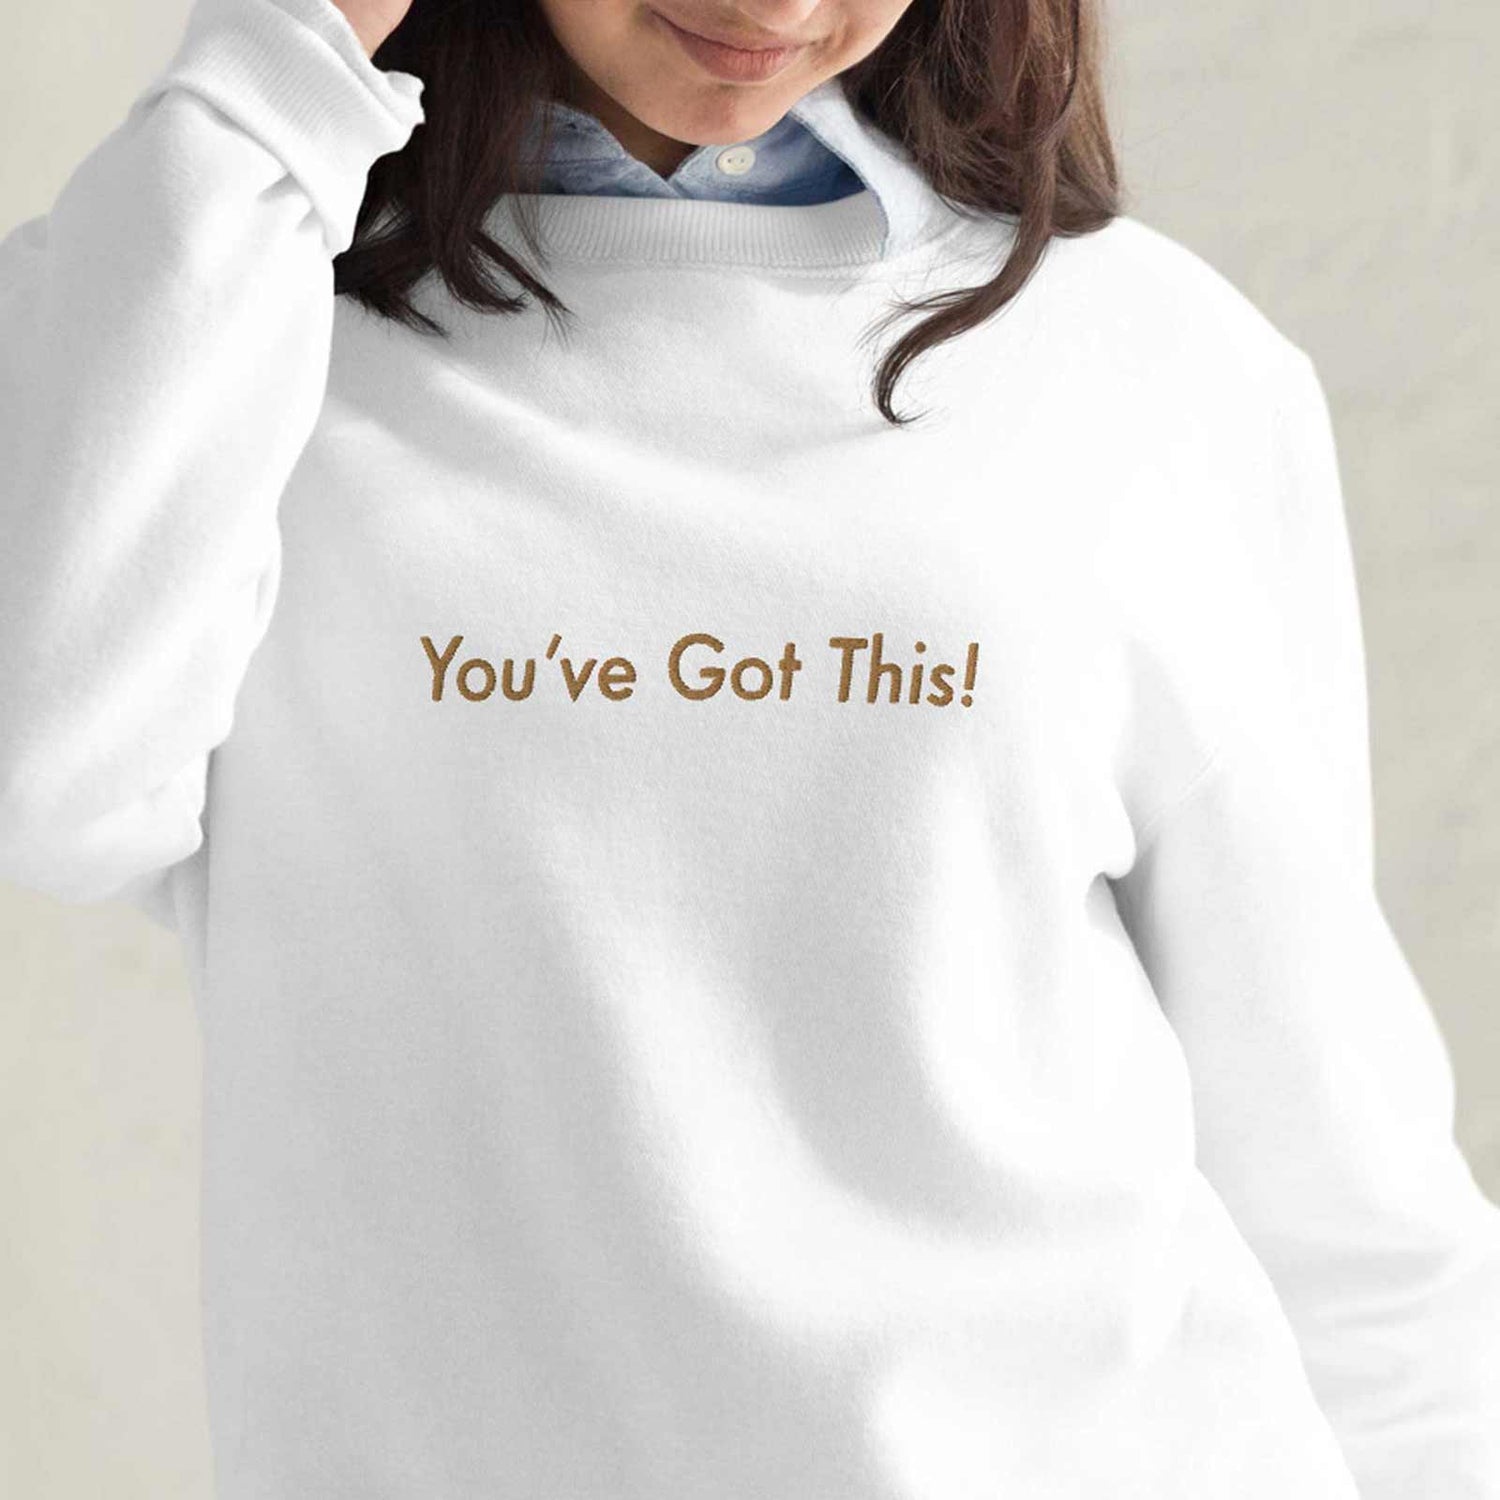 Woman wearing a "You've Got This!" white sweatshirt